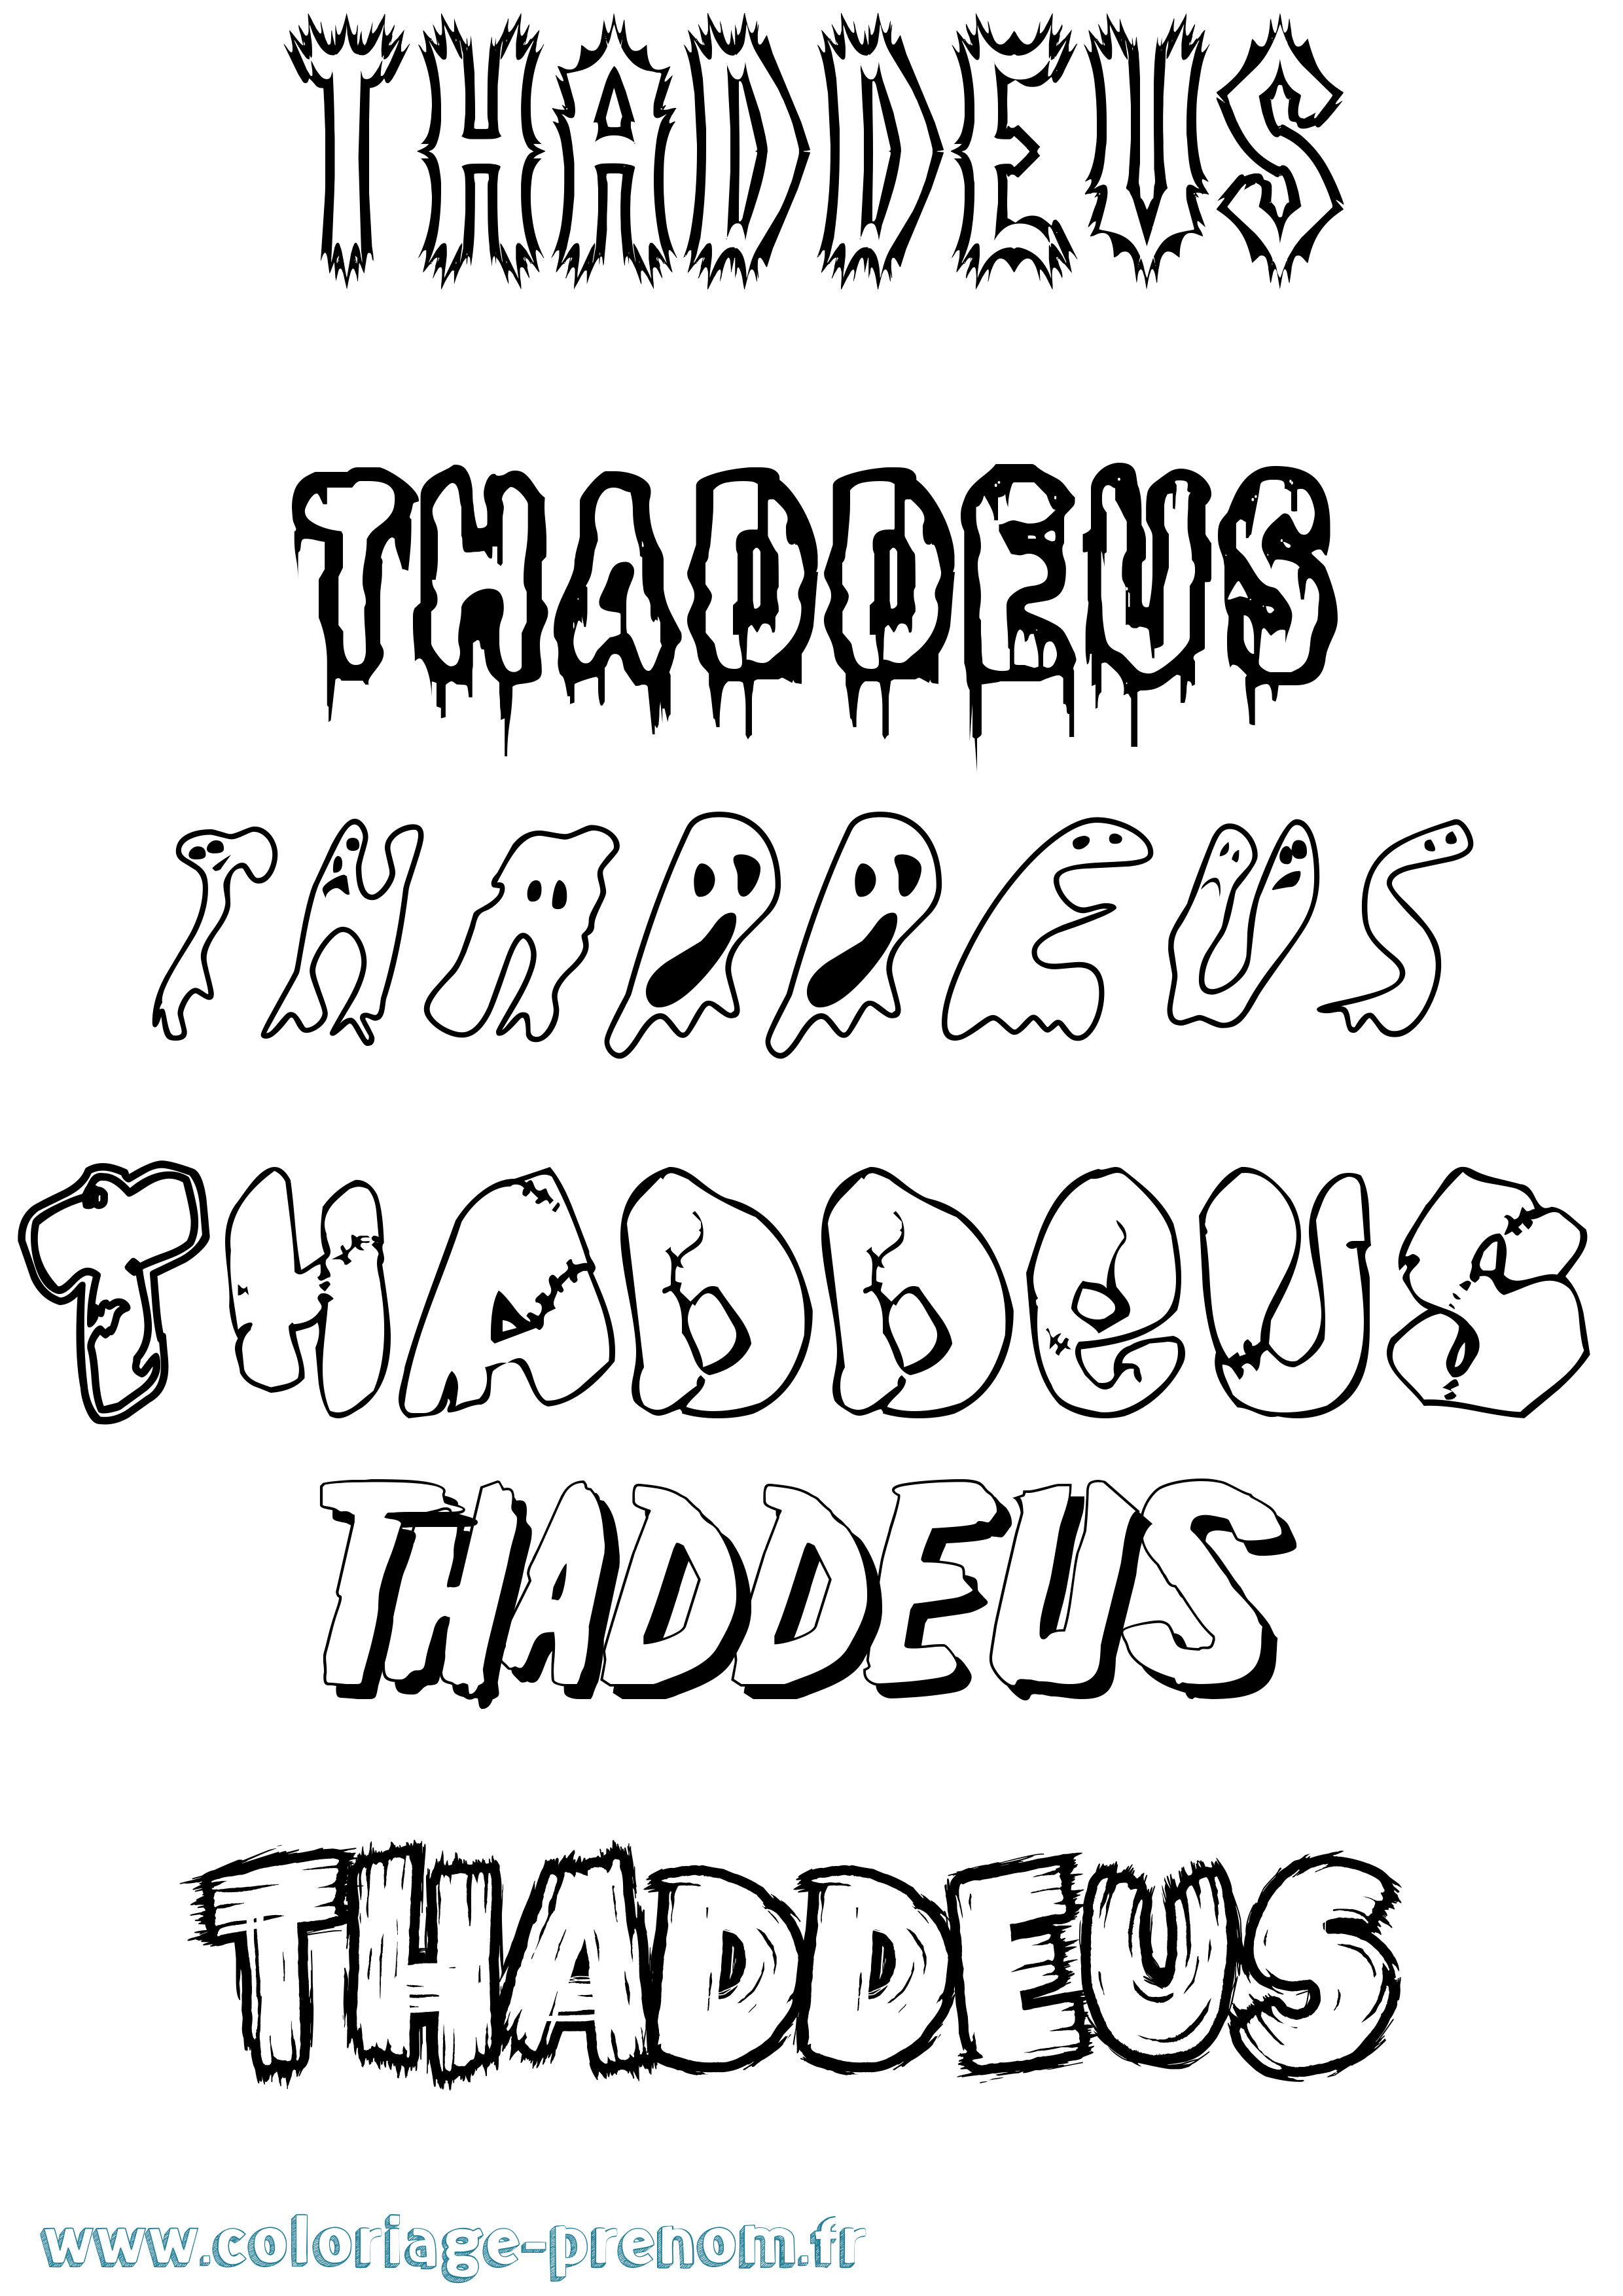 Coloriage prénom Thaddeus Frisson